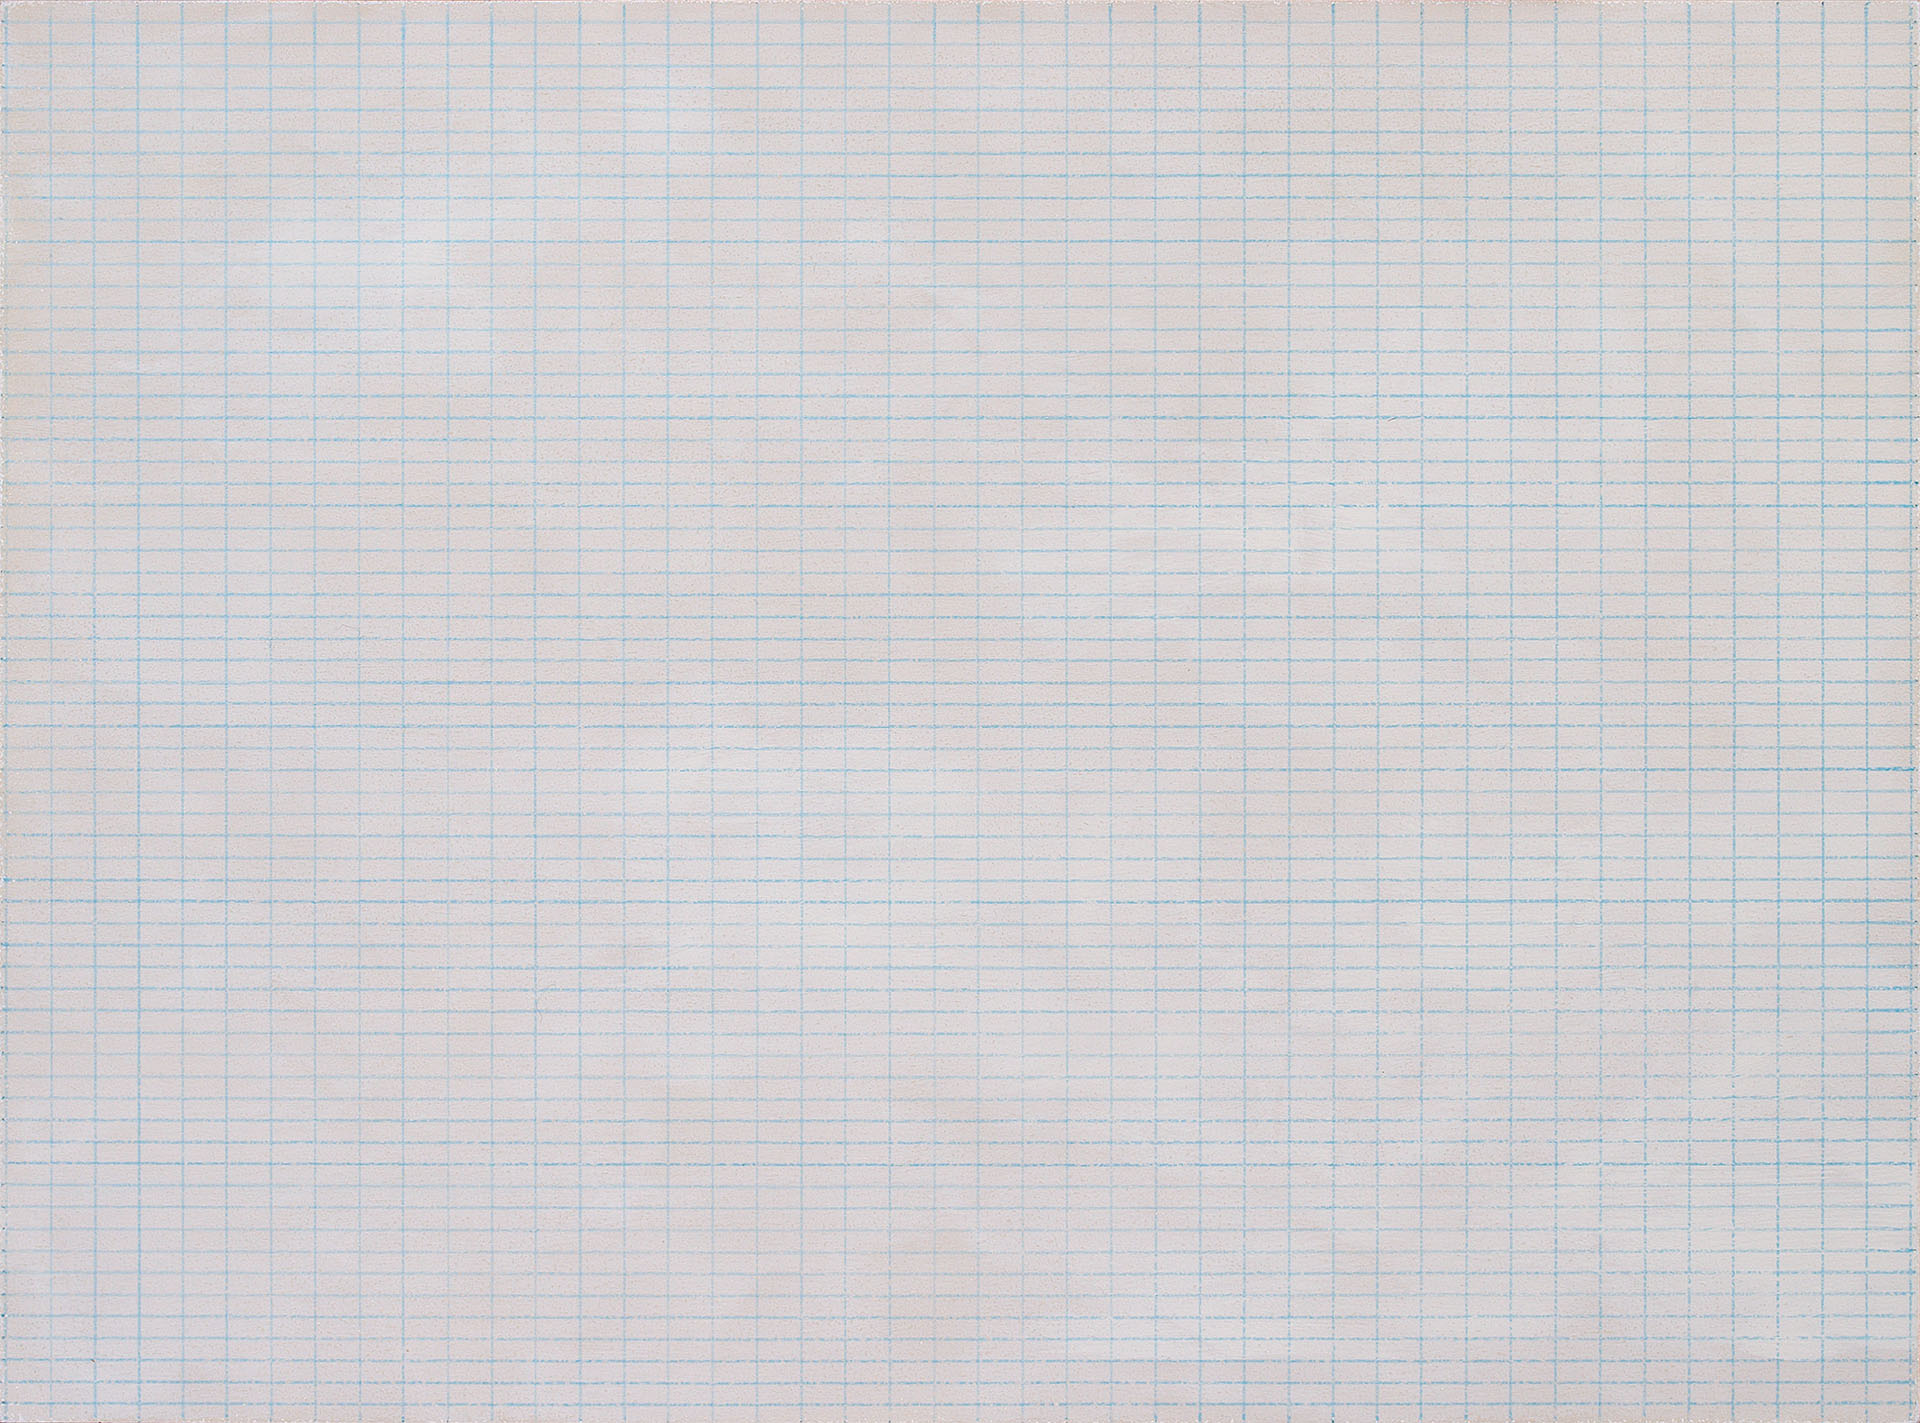  Grid 27, 2014, acrylic on aluminium, 325 x 435mm 